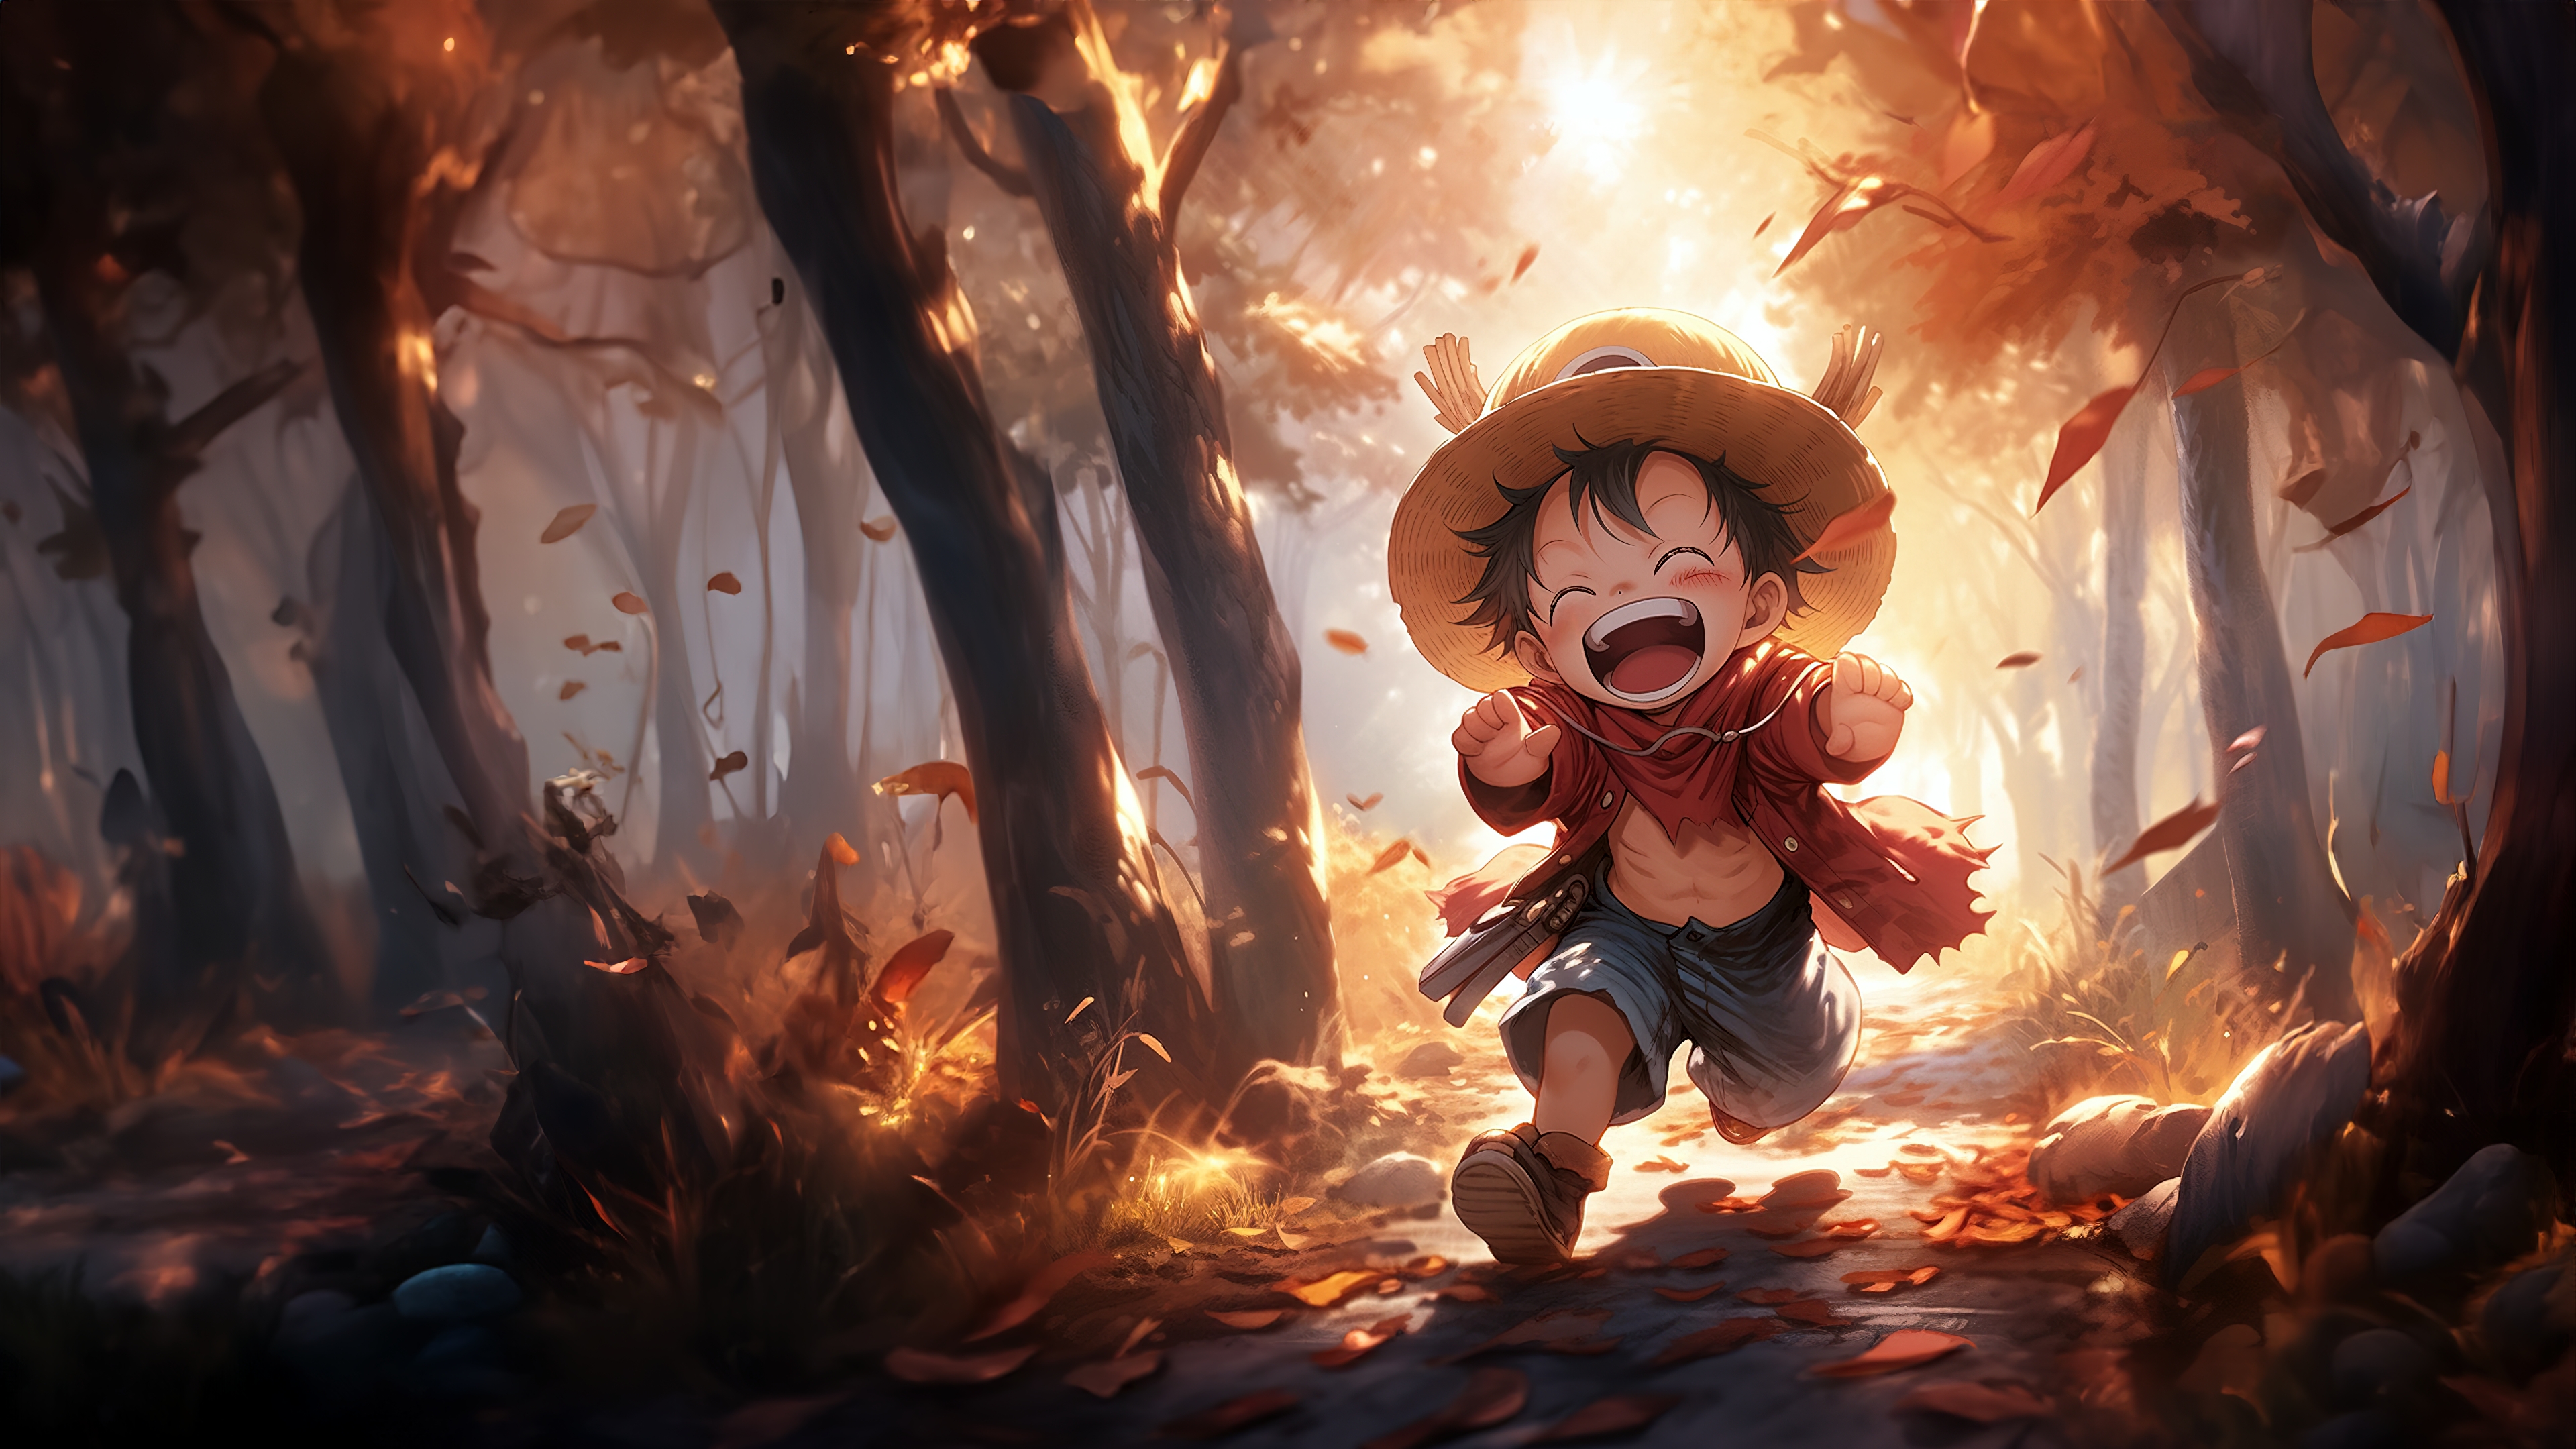 HD wallpaper, One Piece, Chibi Luffy, Ai Art, Autumn Forest